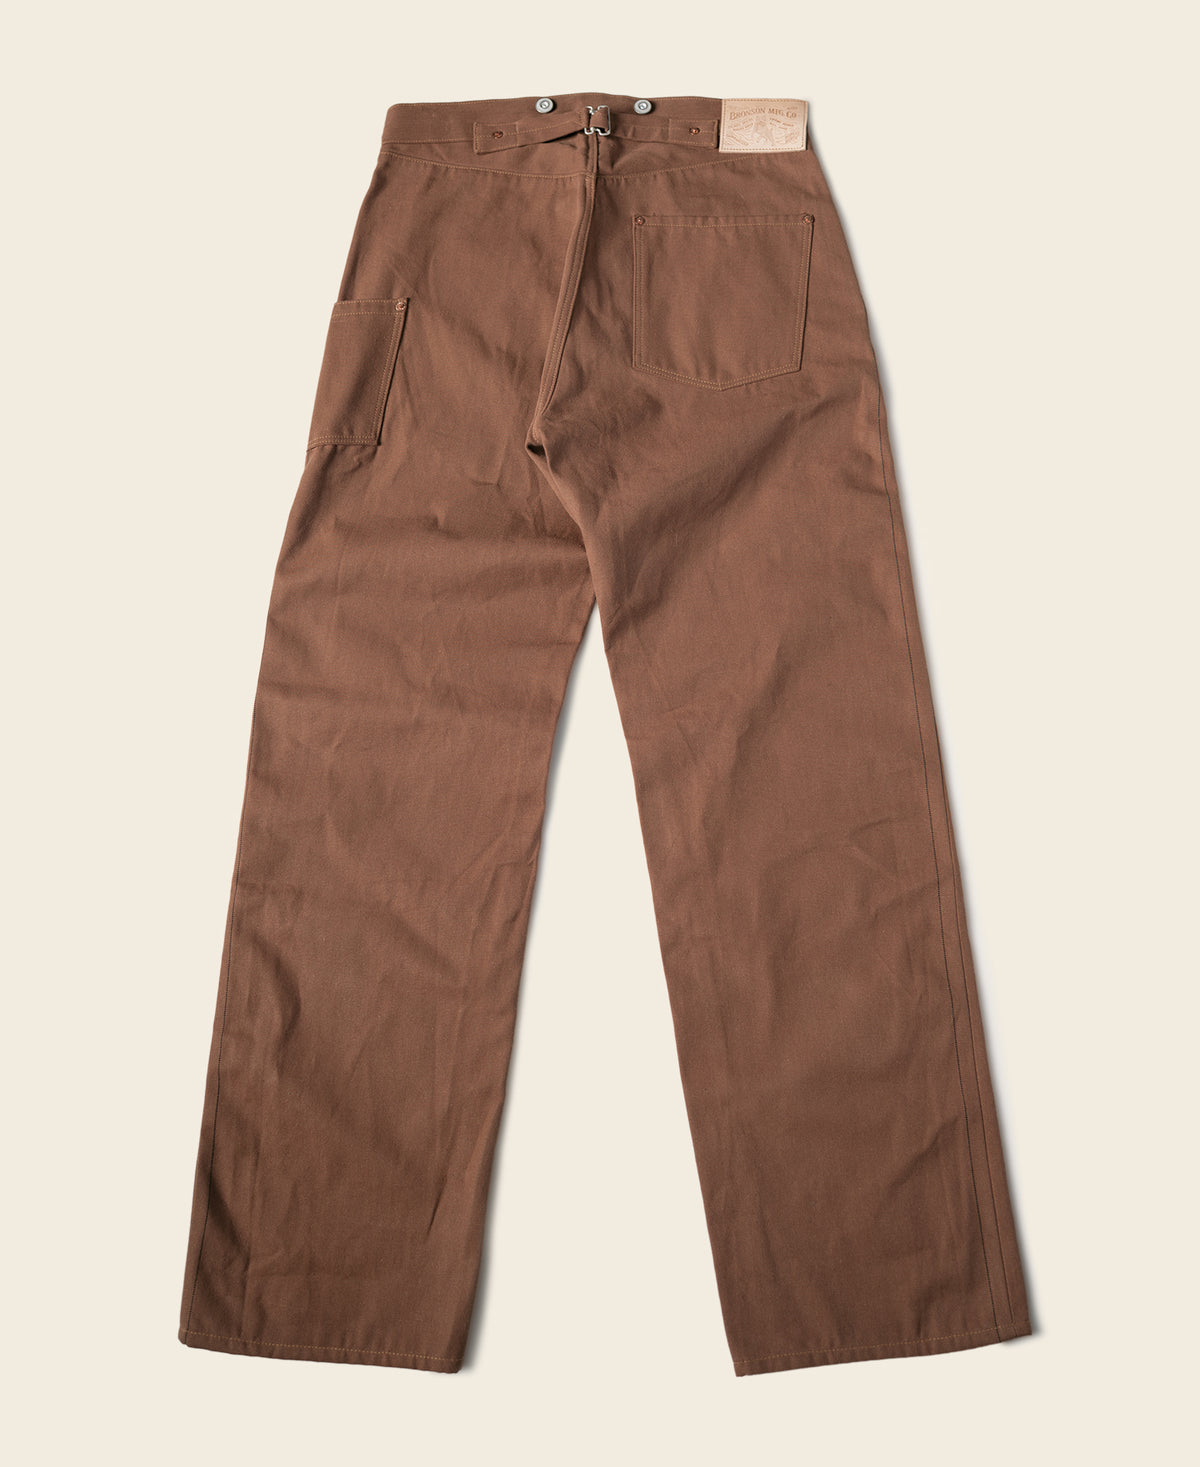 Lot 873 1873 1st Copper Riveted Work Pants